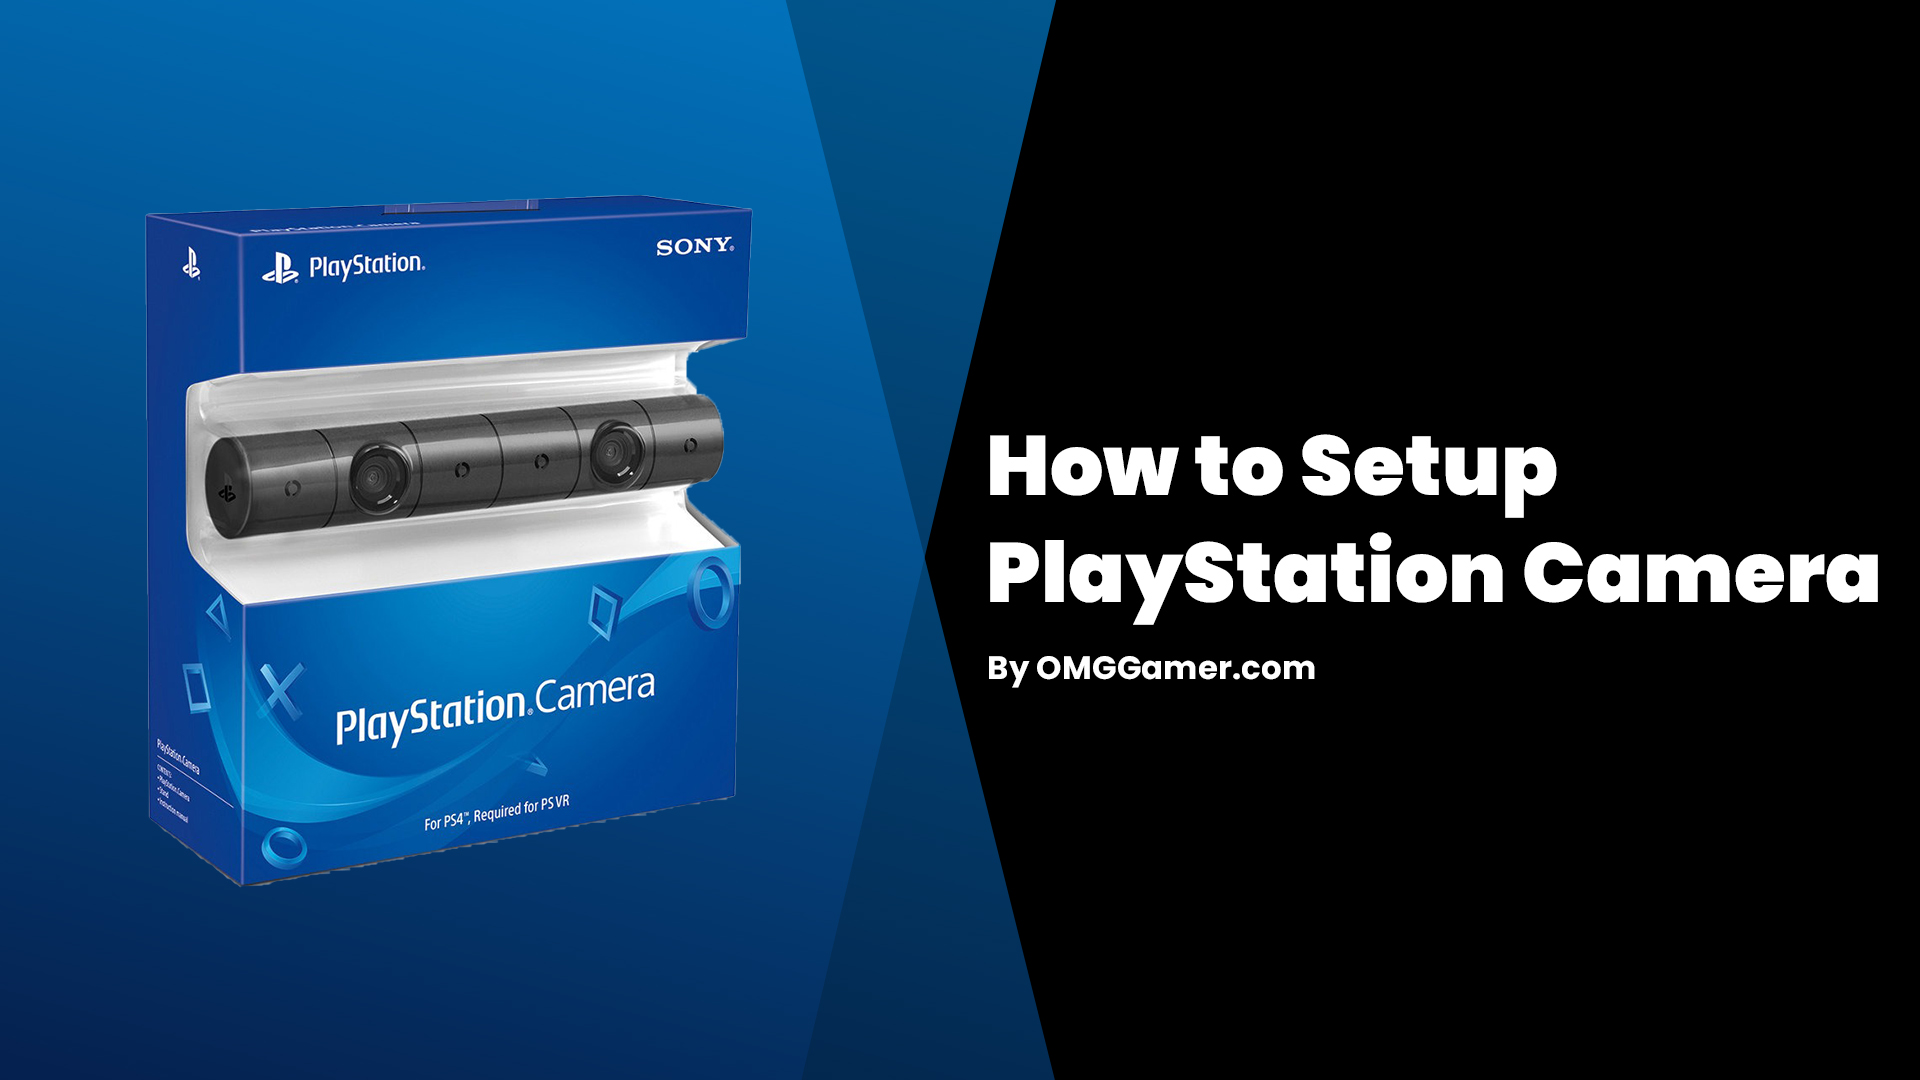 How to Setup PlayStation Camera